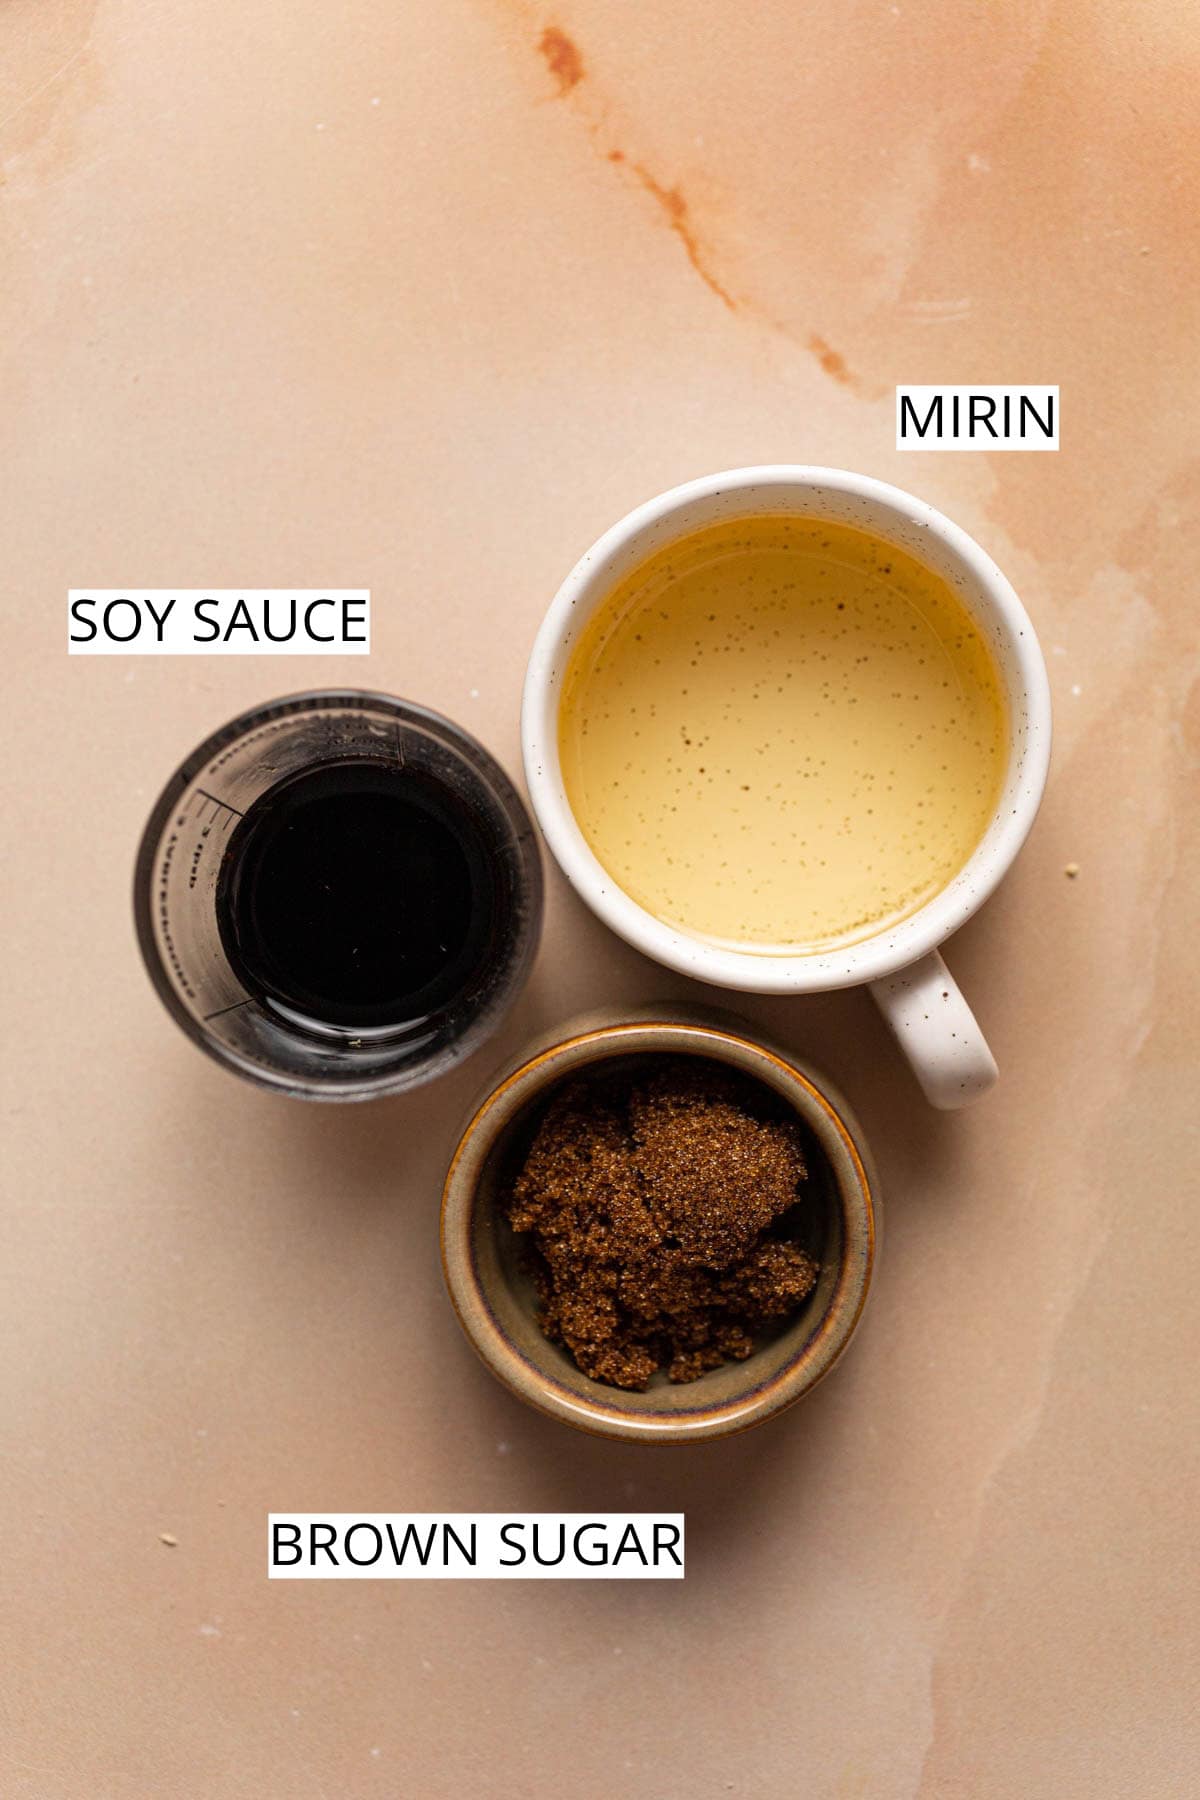 Soy sauce, mirin, and brown sugar.